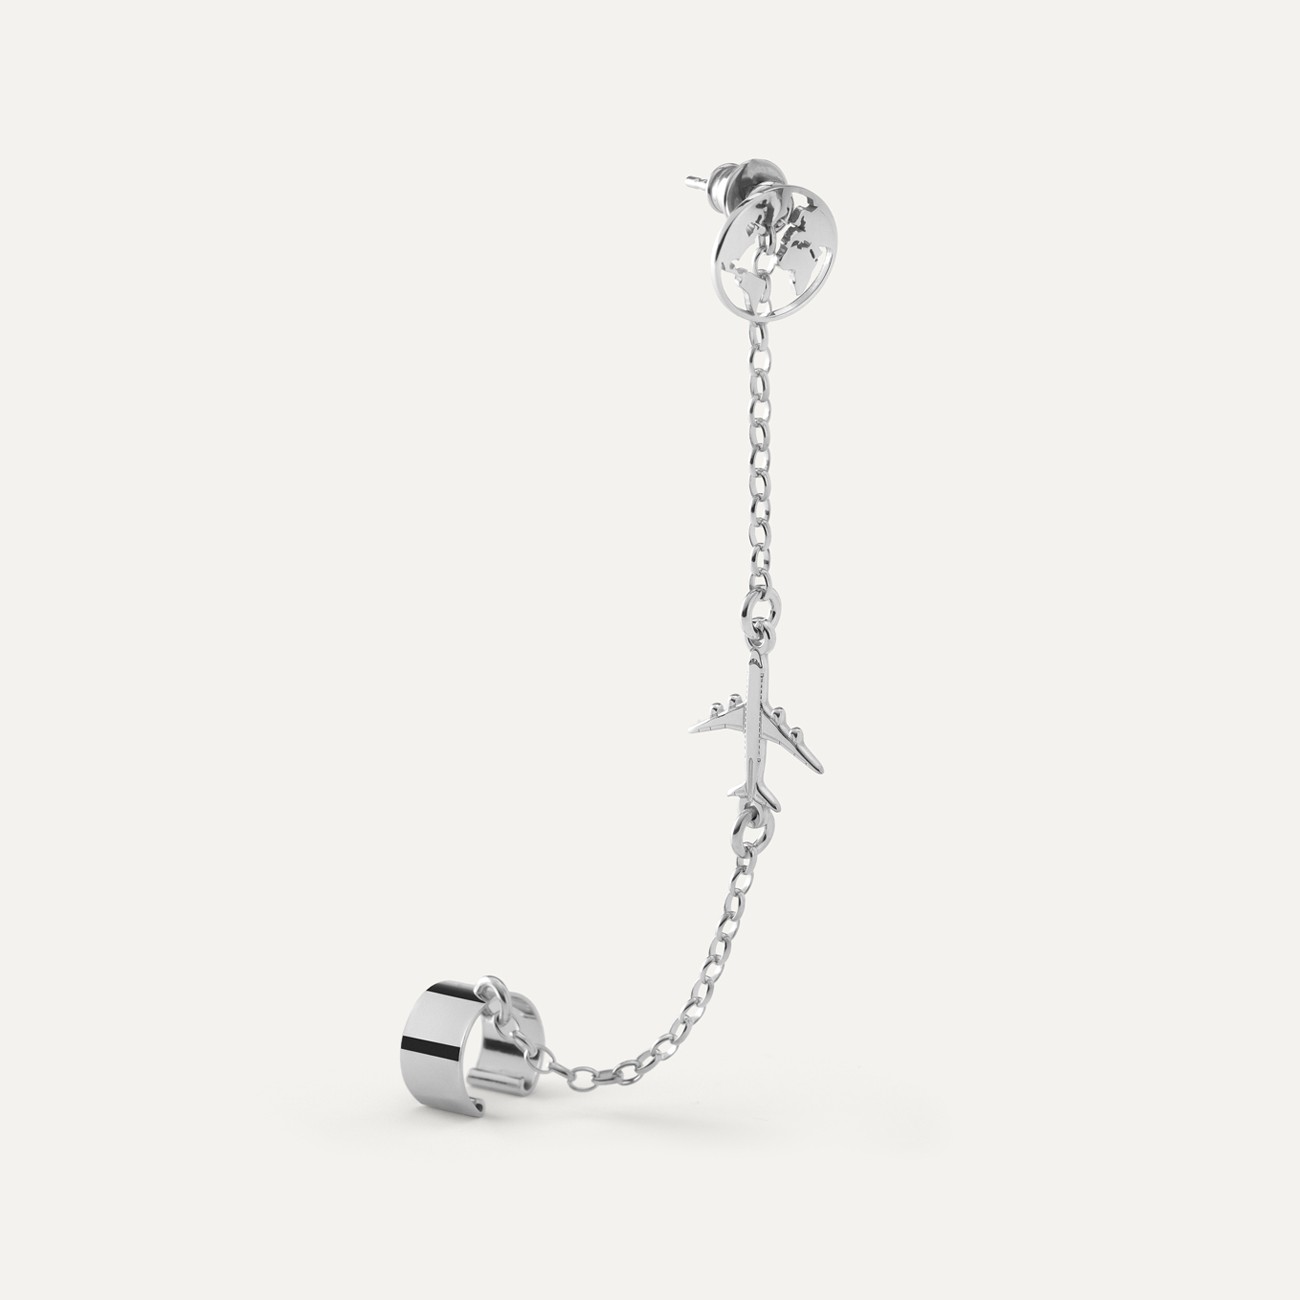 Chain Ear cuff - plane and globe, sterling silver 925